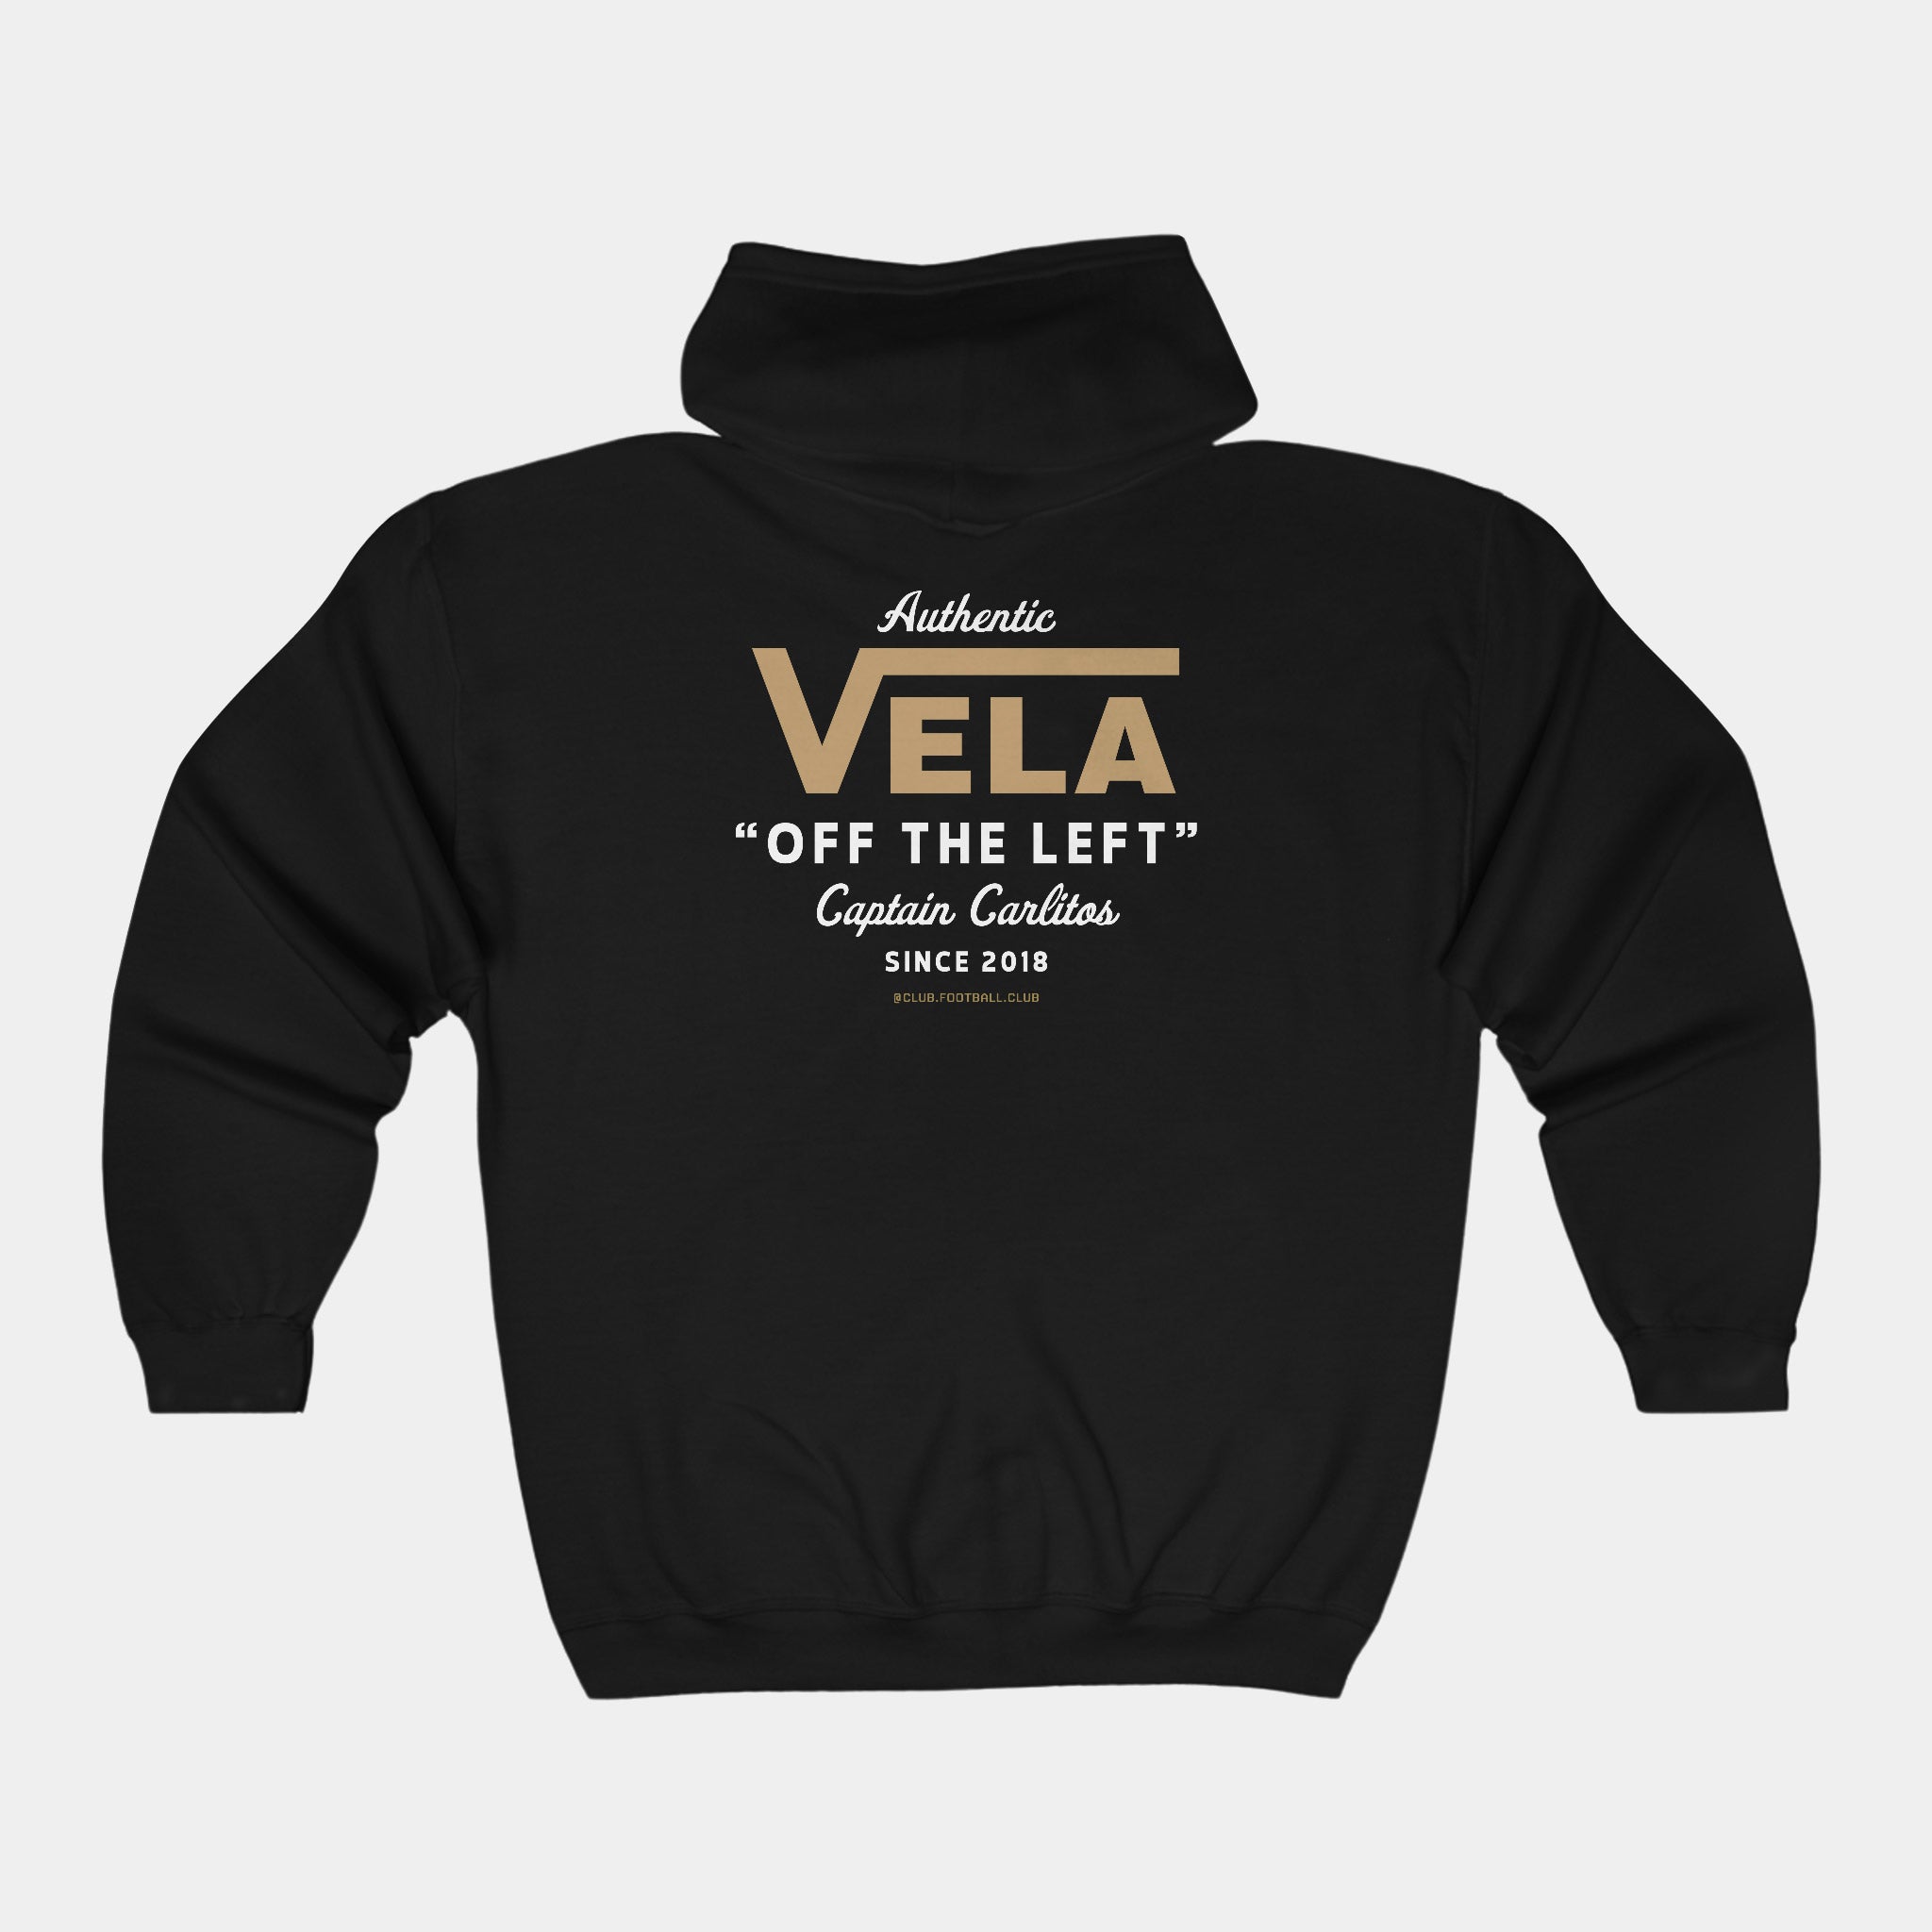 Authentic Vela "Off the Left" (LAFC) Zip-up Hooded Sweatshirt